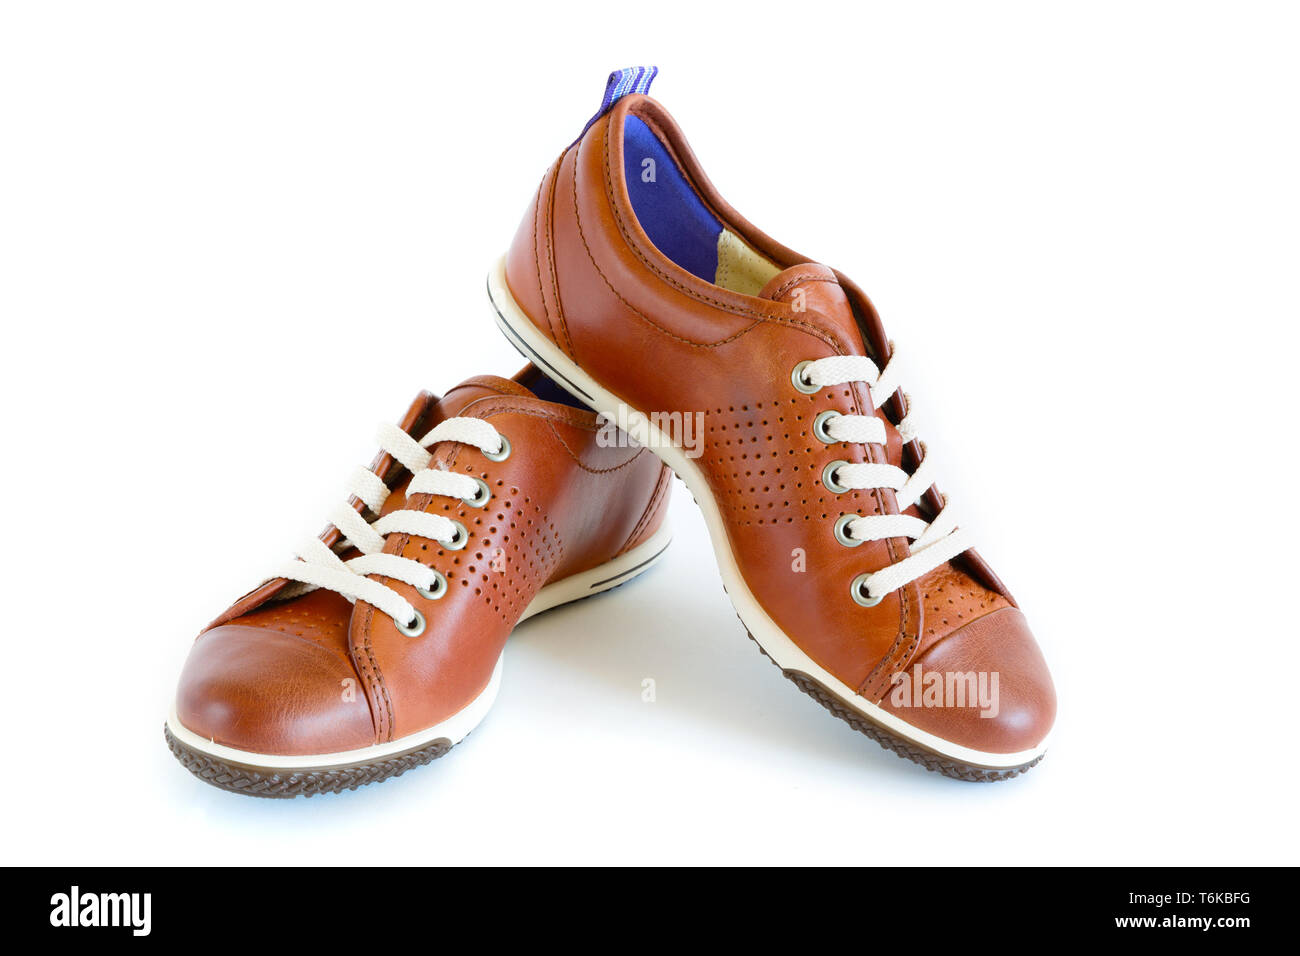 isolated unisex modern style jogging shoes Stock Photo